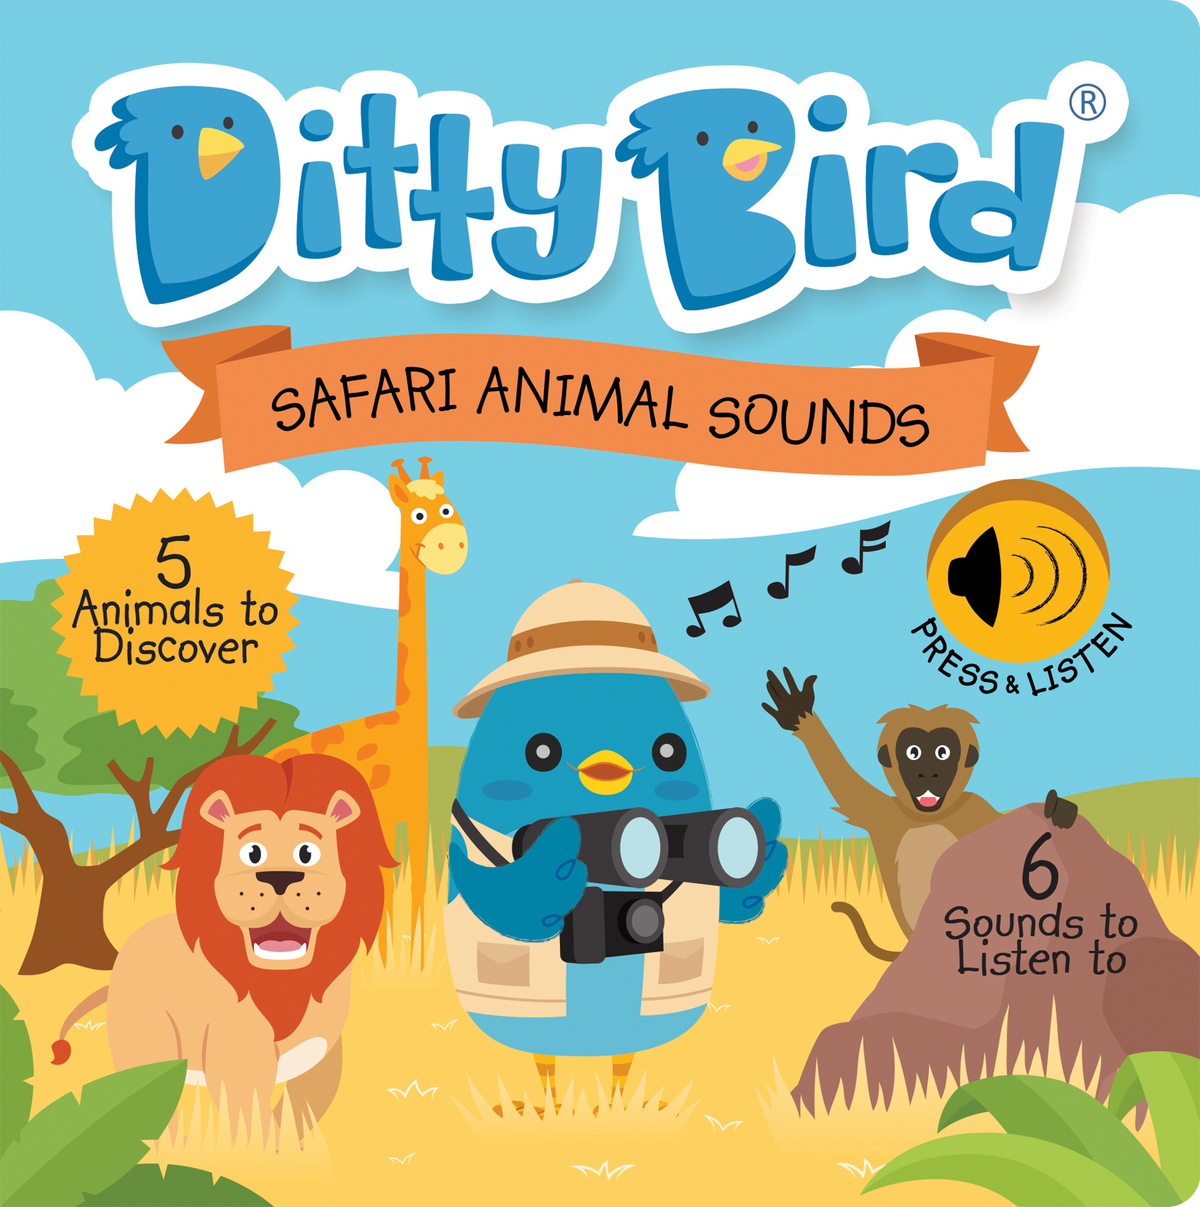 Ditty Bird- Safari Animal Sounds